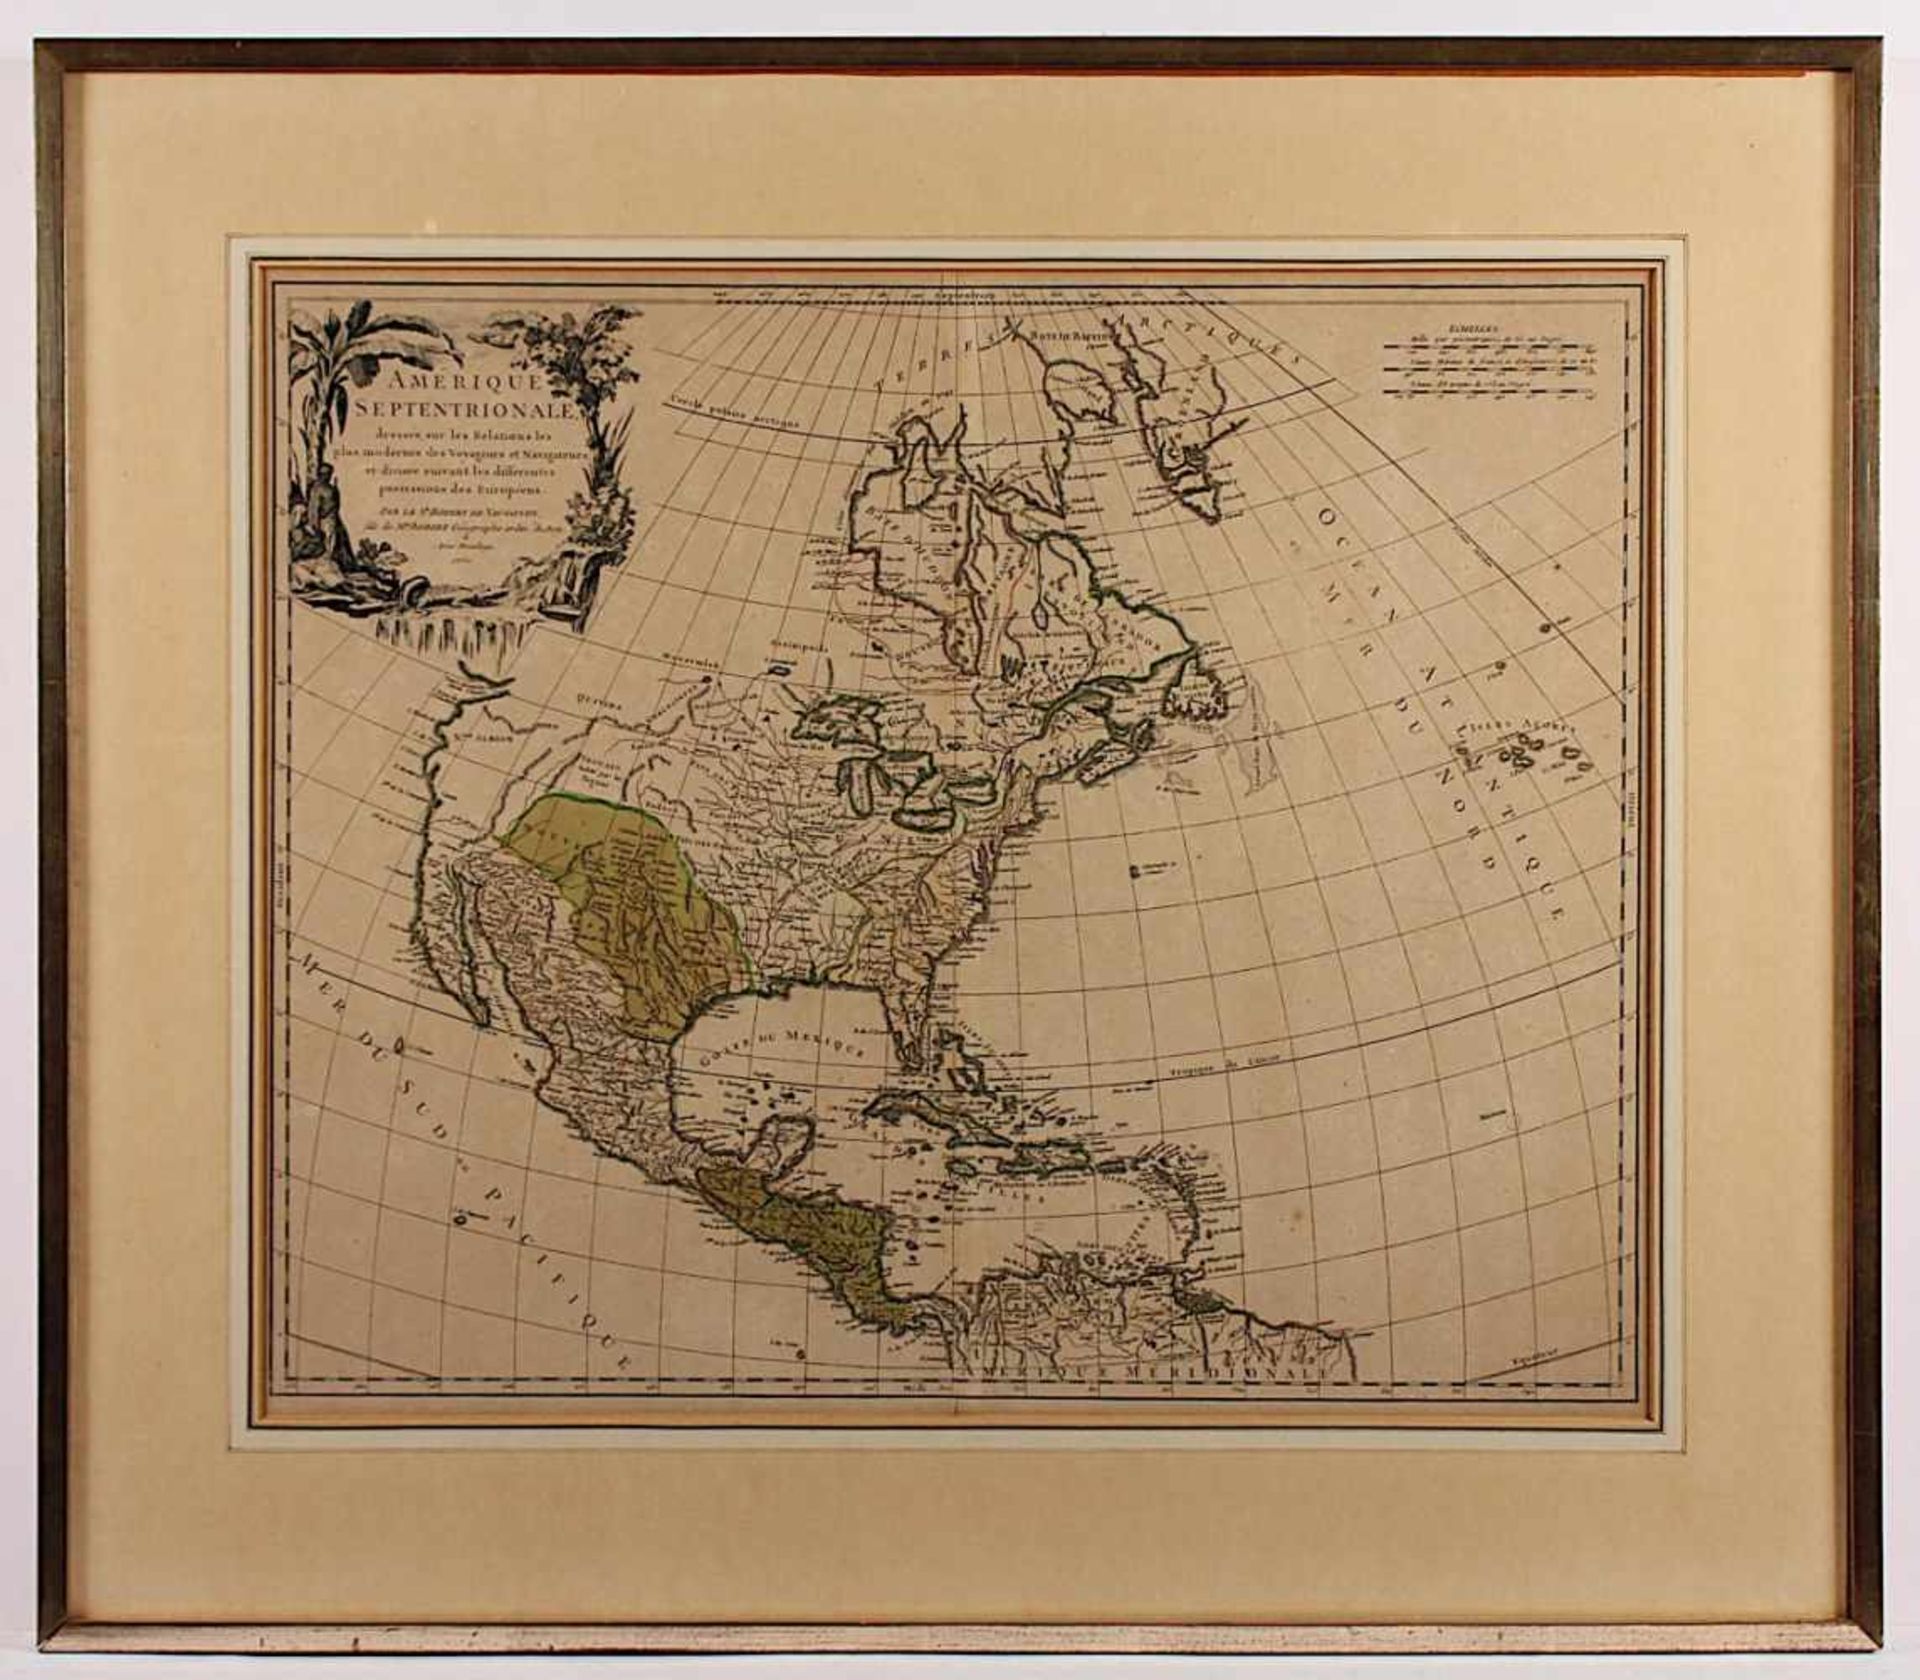 NORDAMERIKA, "Amérique septentrionale", kolorierter Kupferstich, 48 x 58, bei VAUGONDY, um 1760, R.